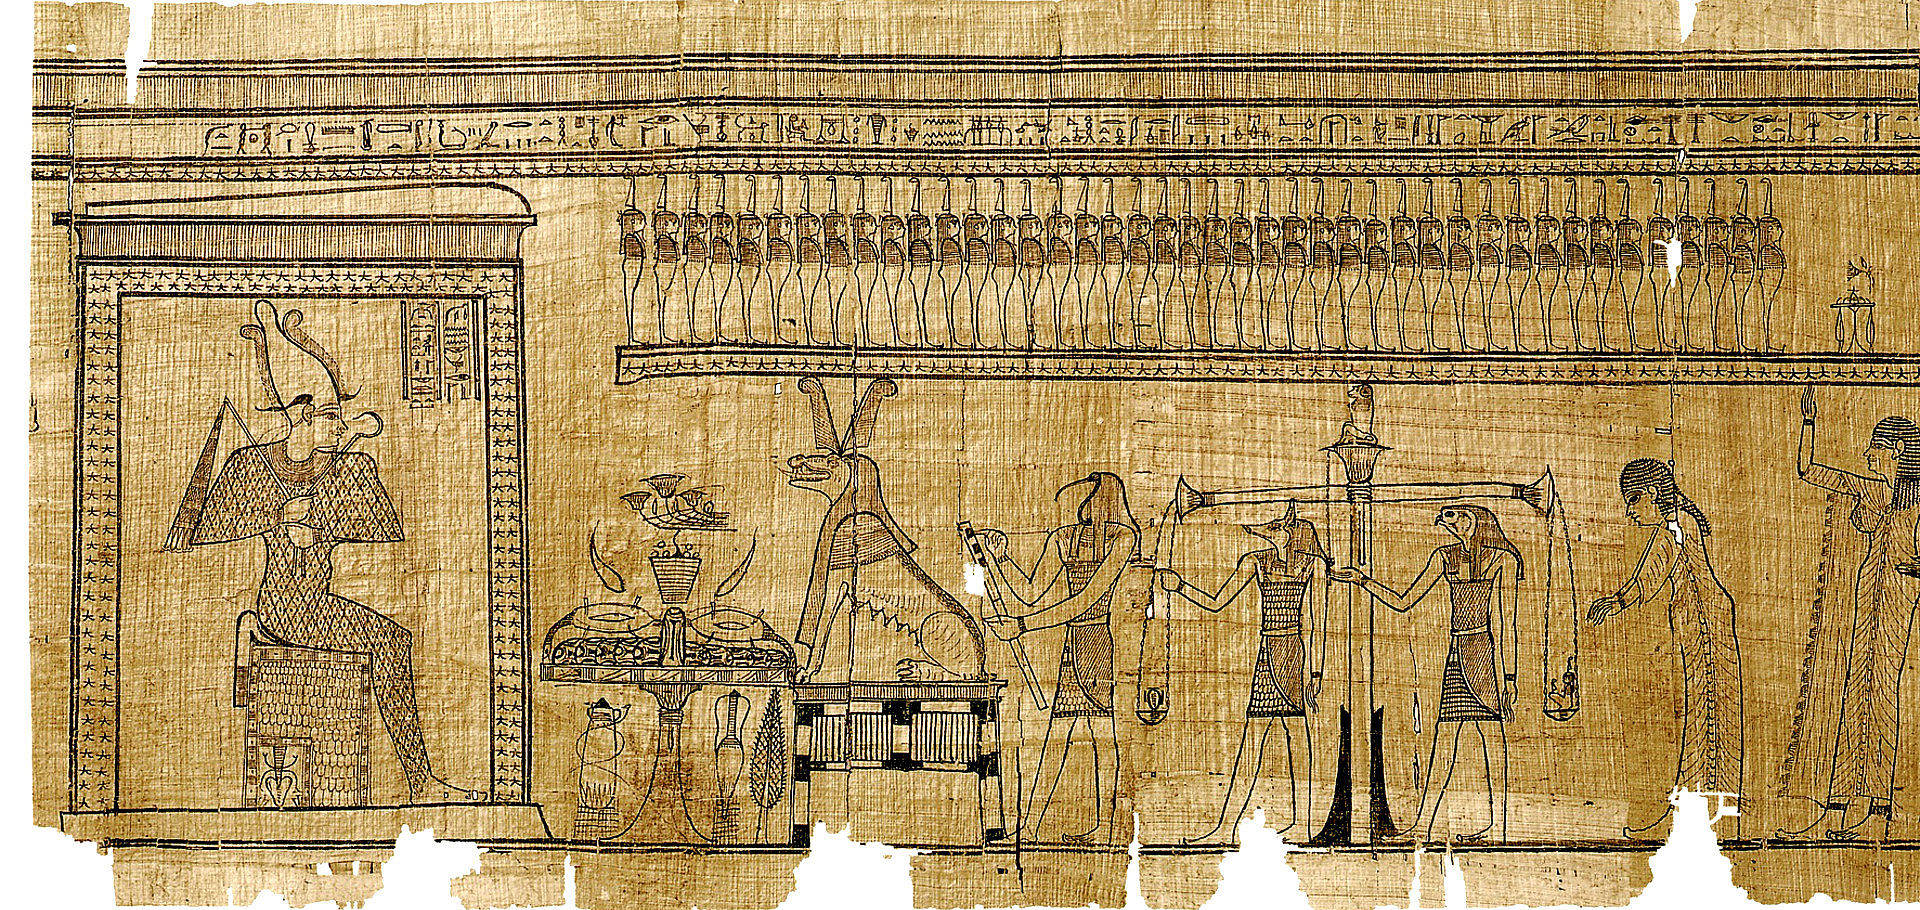 Millennia-old papyri